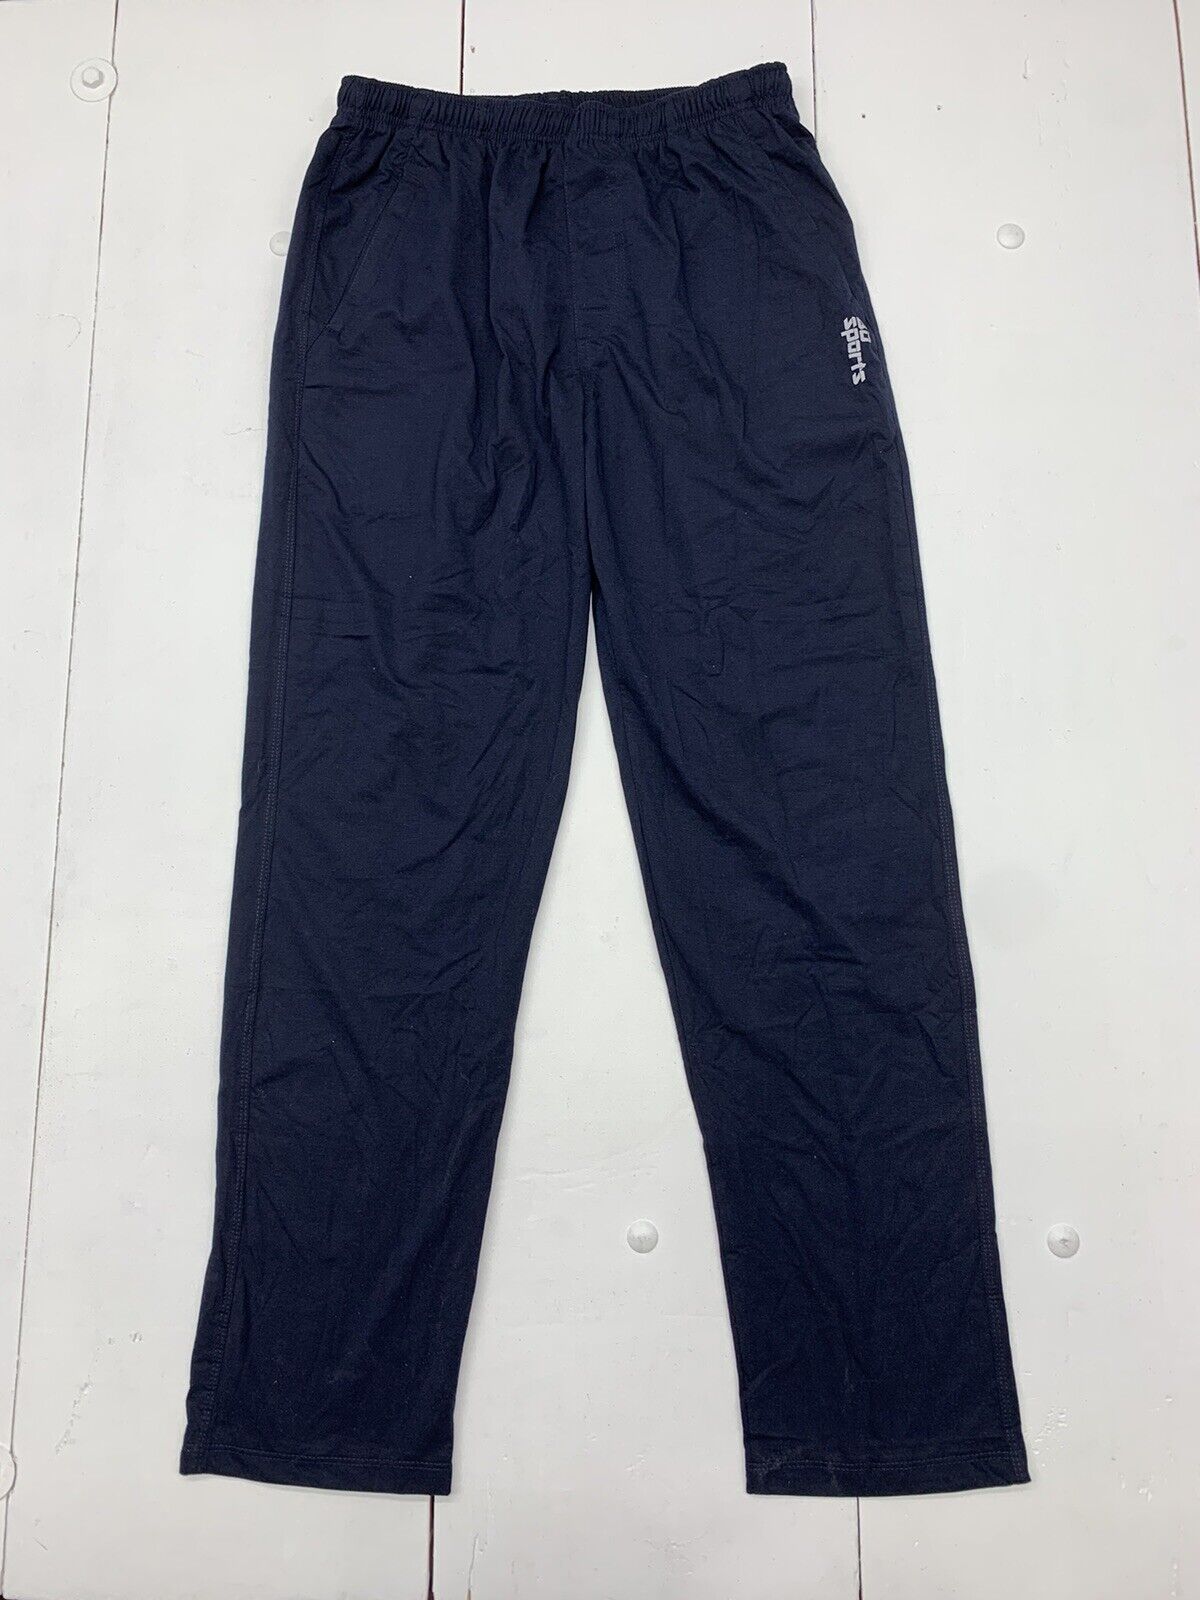 Bo Sport Mens Dark Blue Sweatpants Size XL